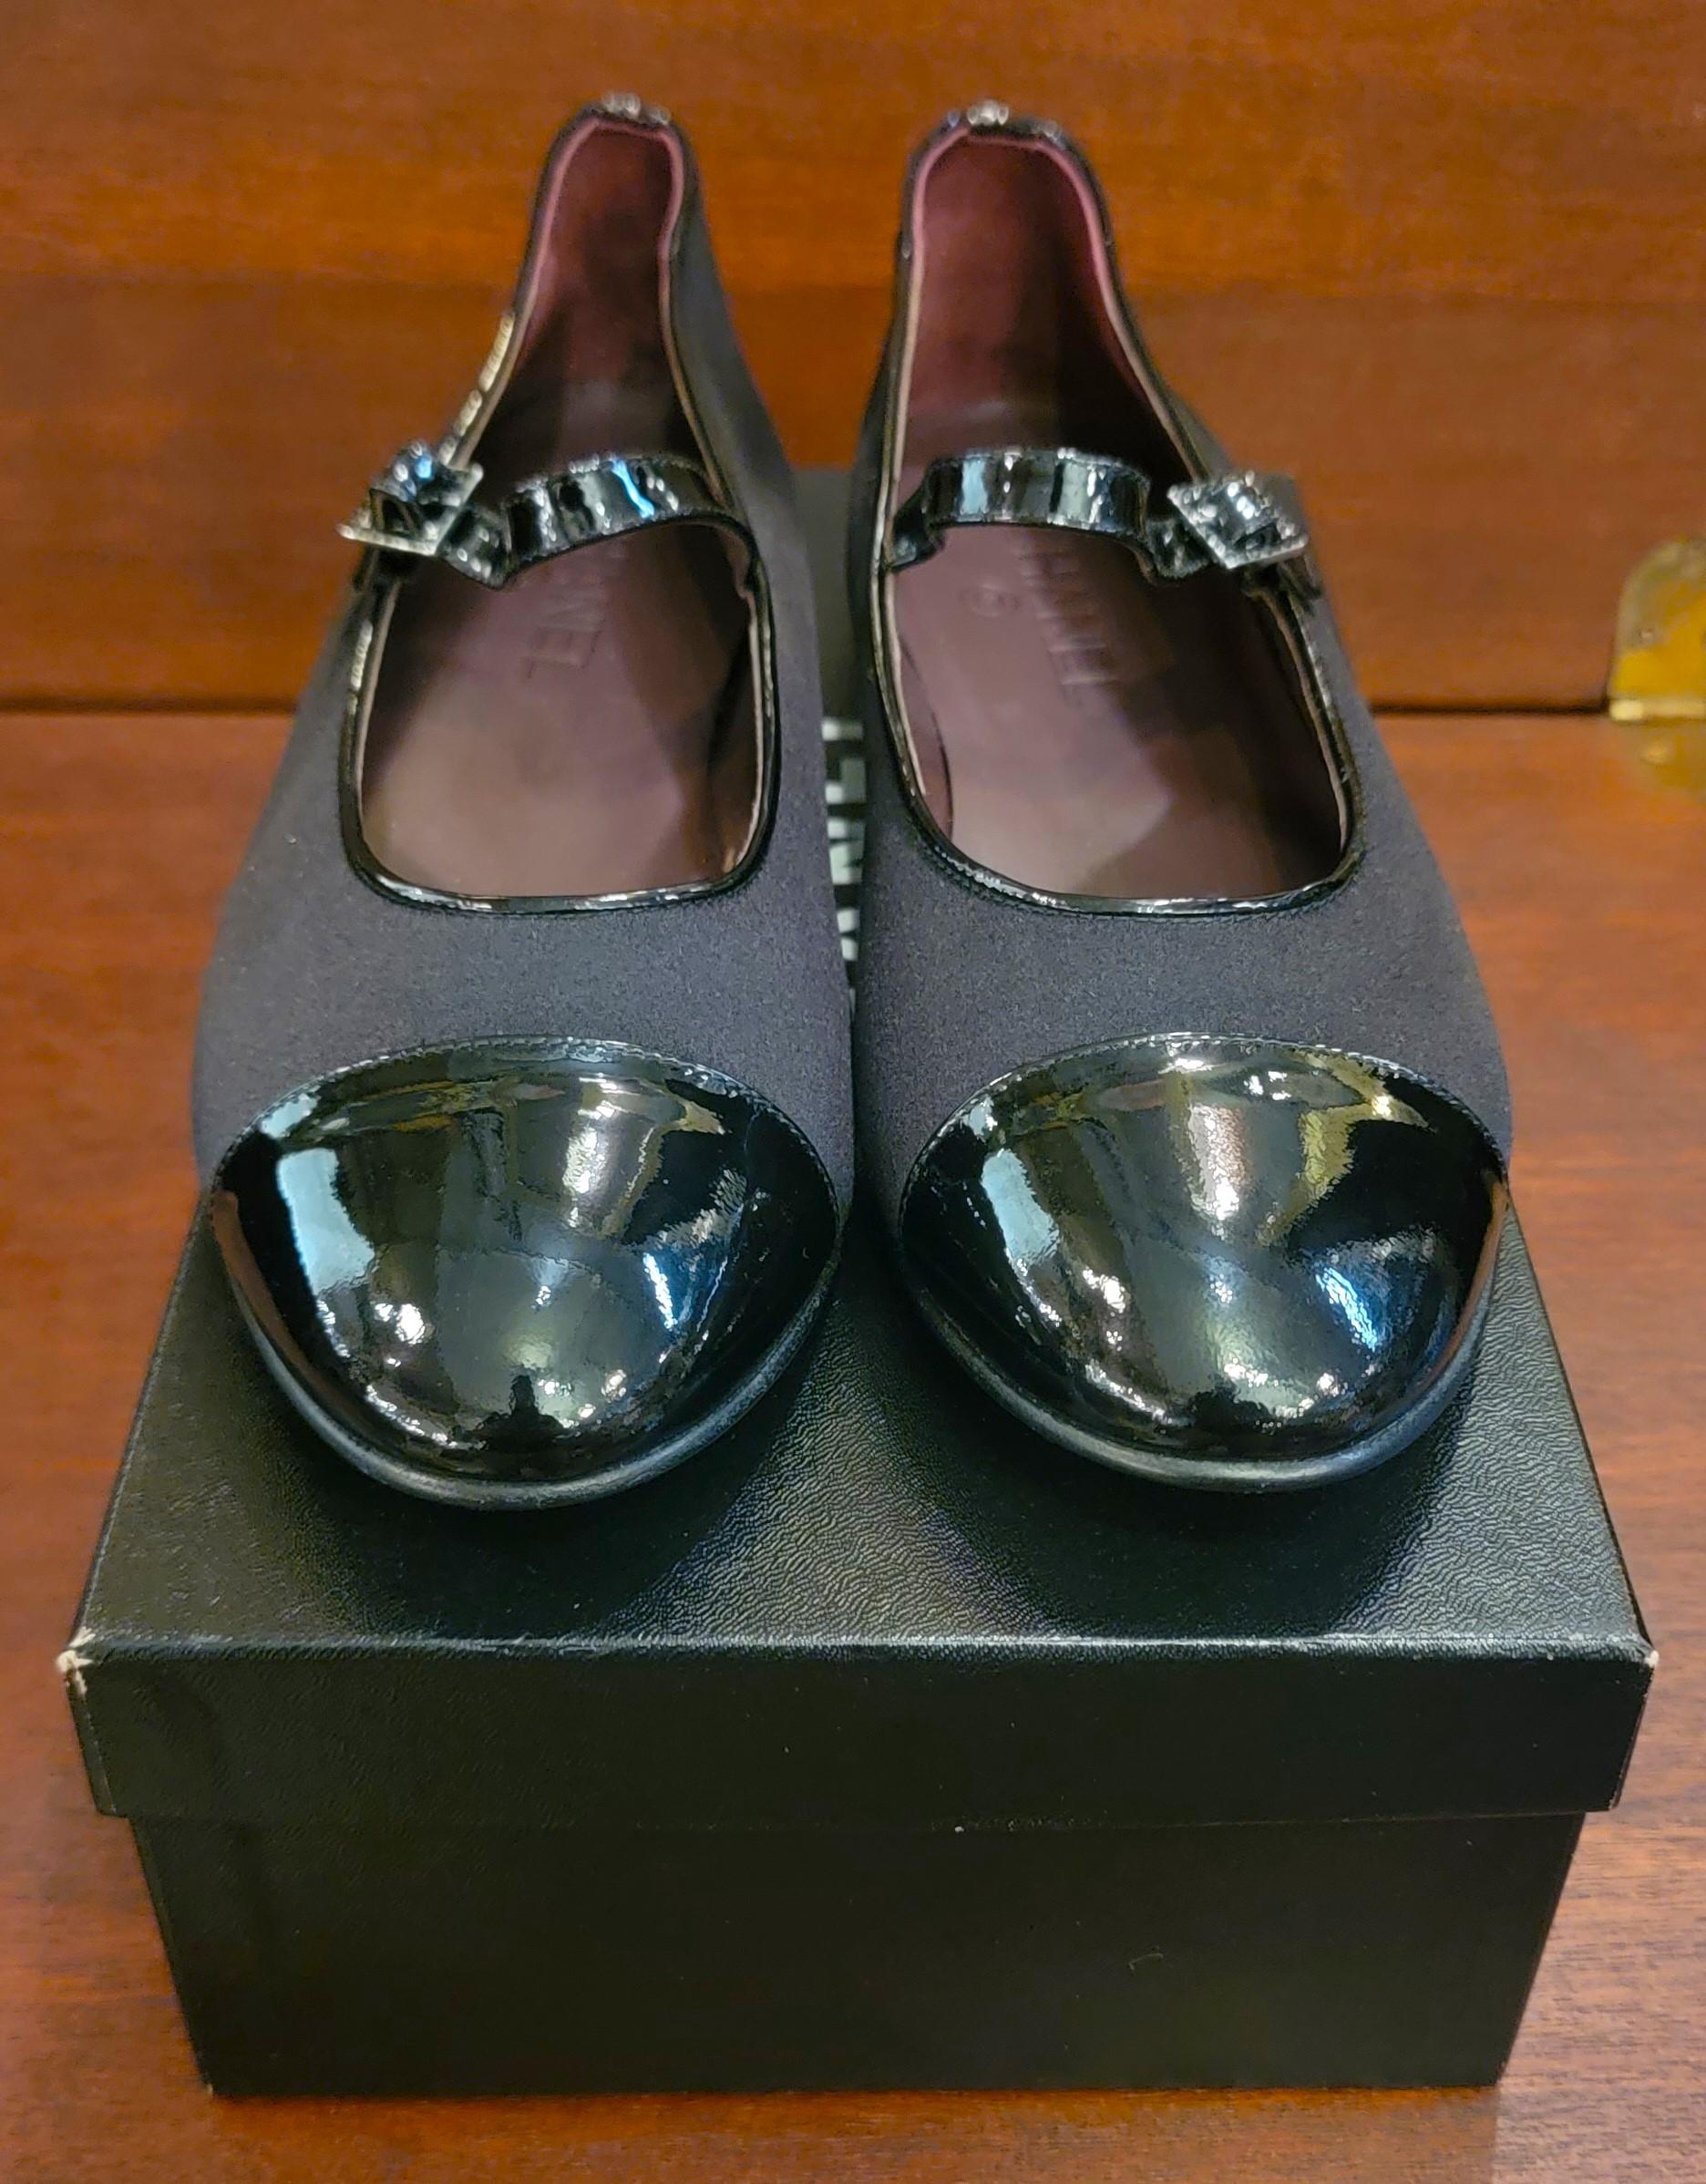 Authentic Brand New Chanel Black Balerina Flats Satin Leather Size 39 3